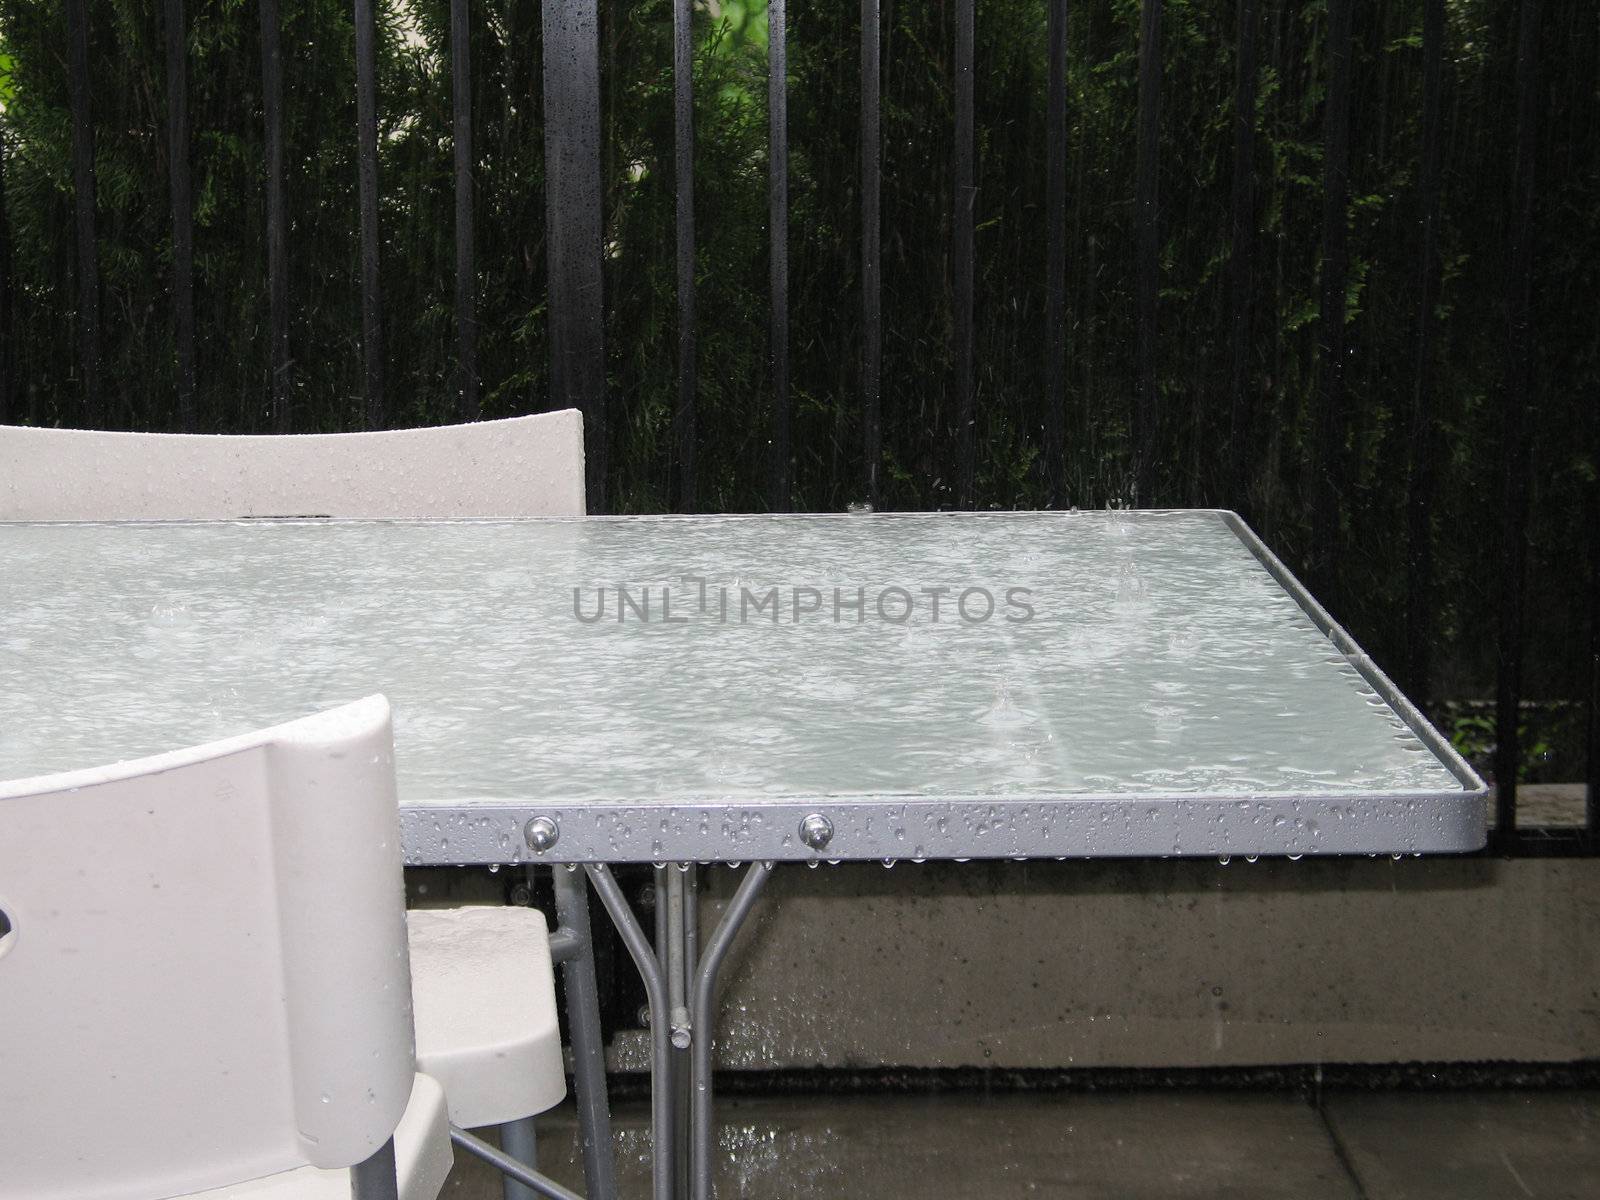 heavy rain on a table by mmm